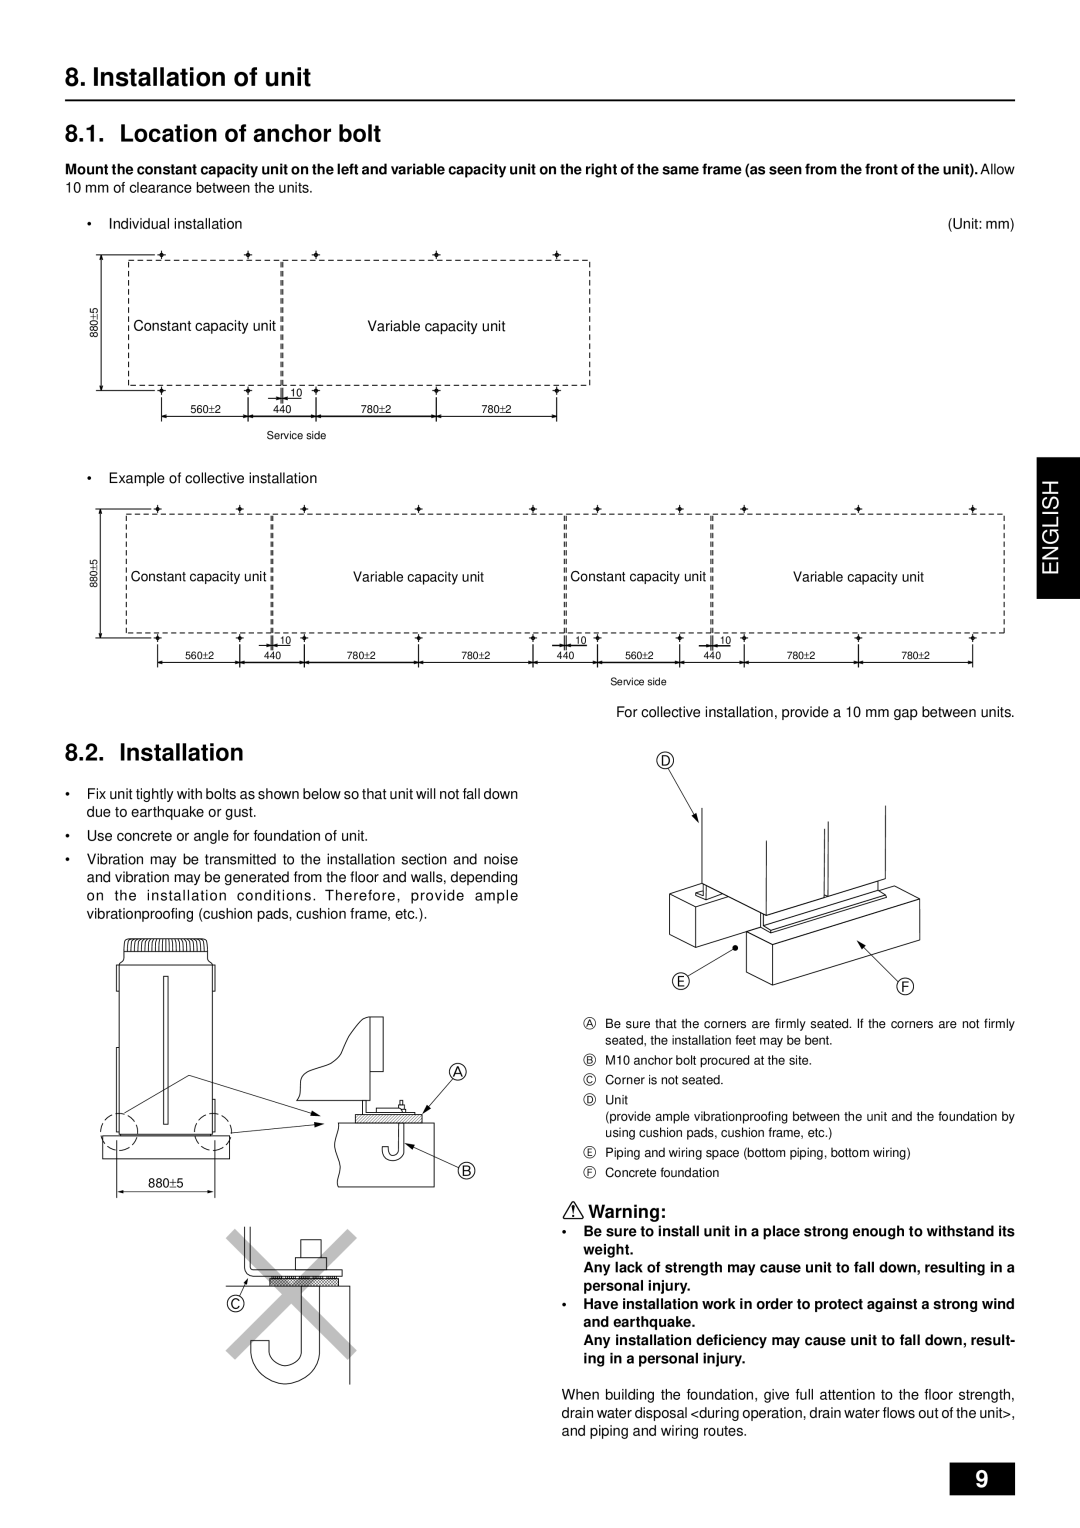 Mitsubishi Electronics PUHY-YMC installation manual Installation of unit, Location of anchor bolt, English 